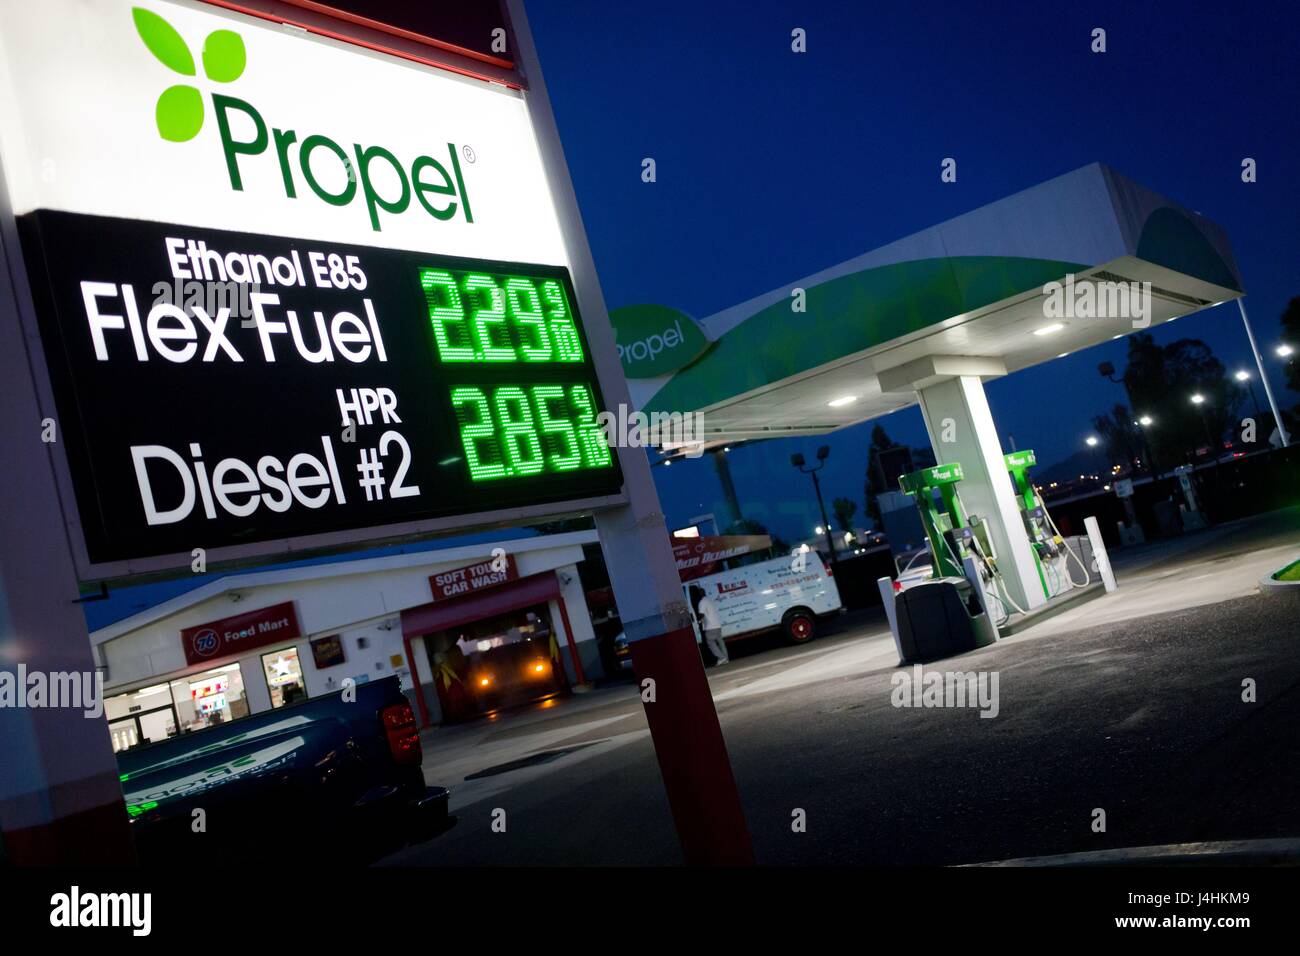 Propel gas station selling Flex Fuel E85 and Diesel HPR, aka renewable ...